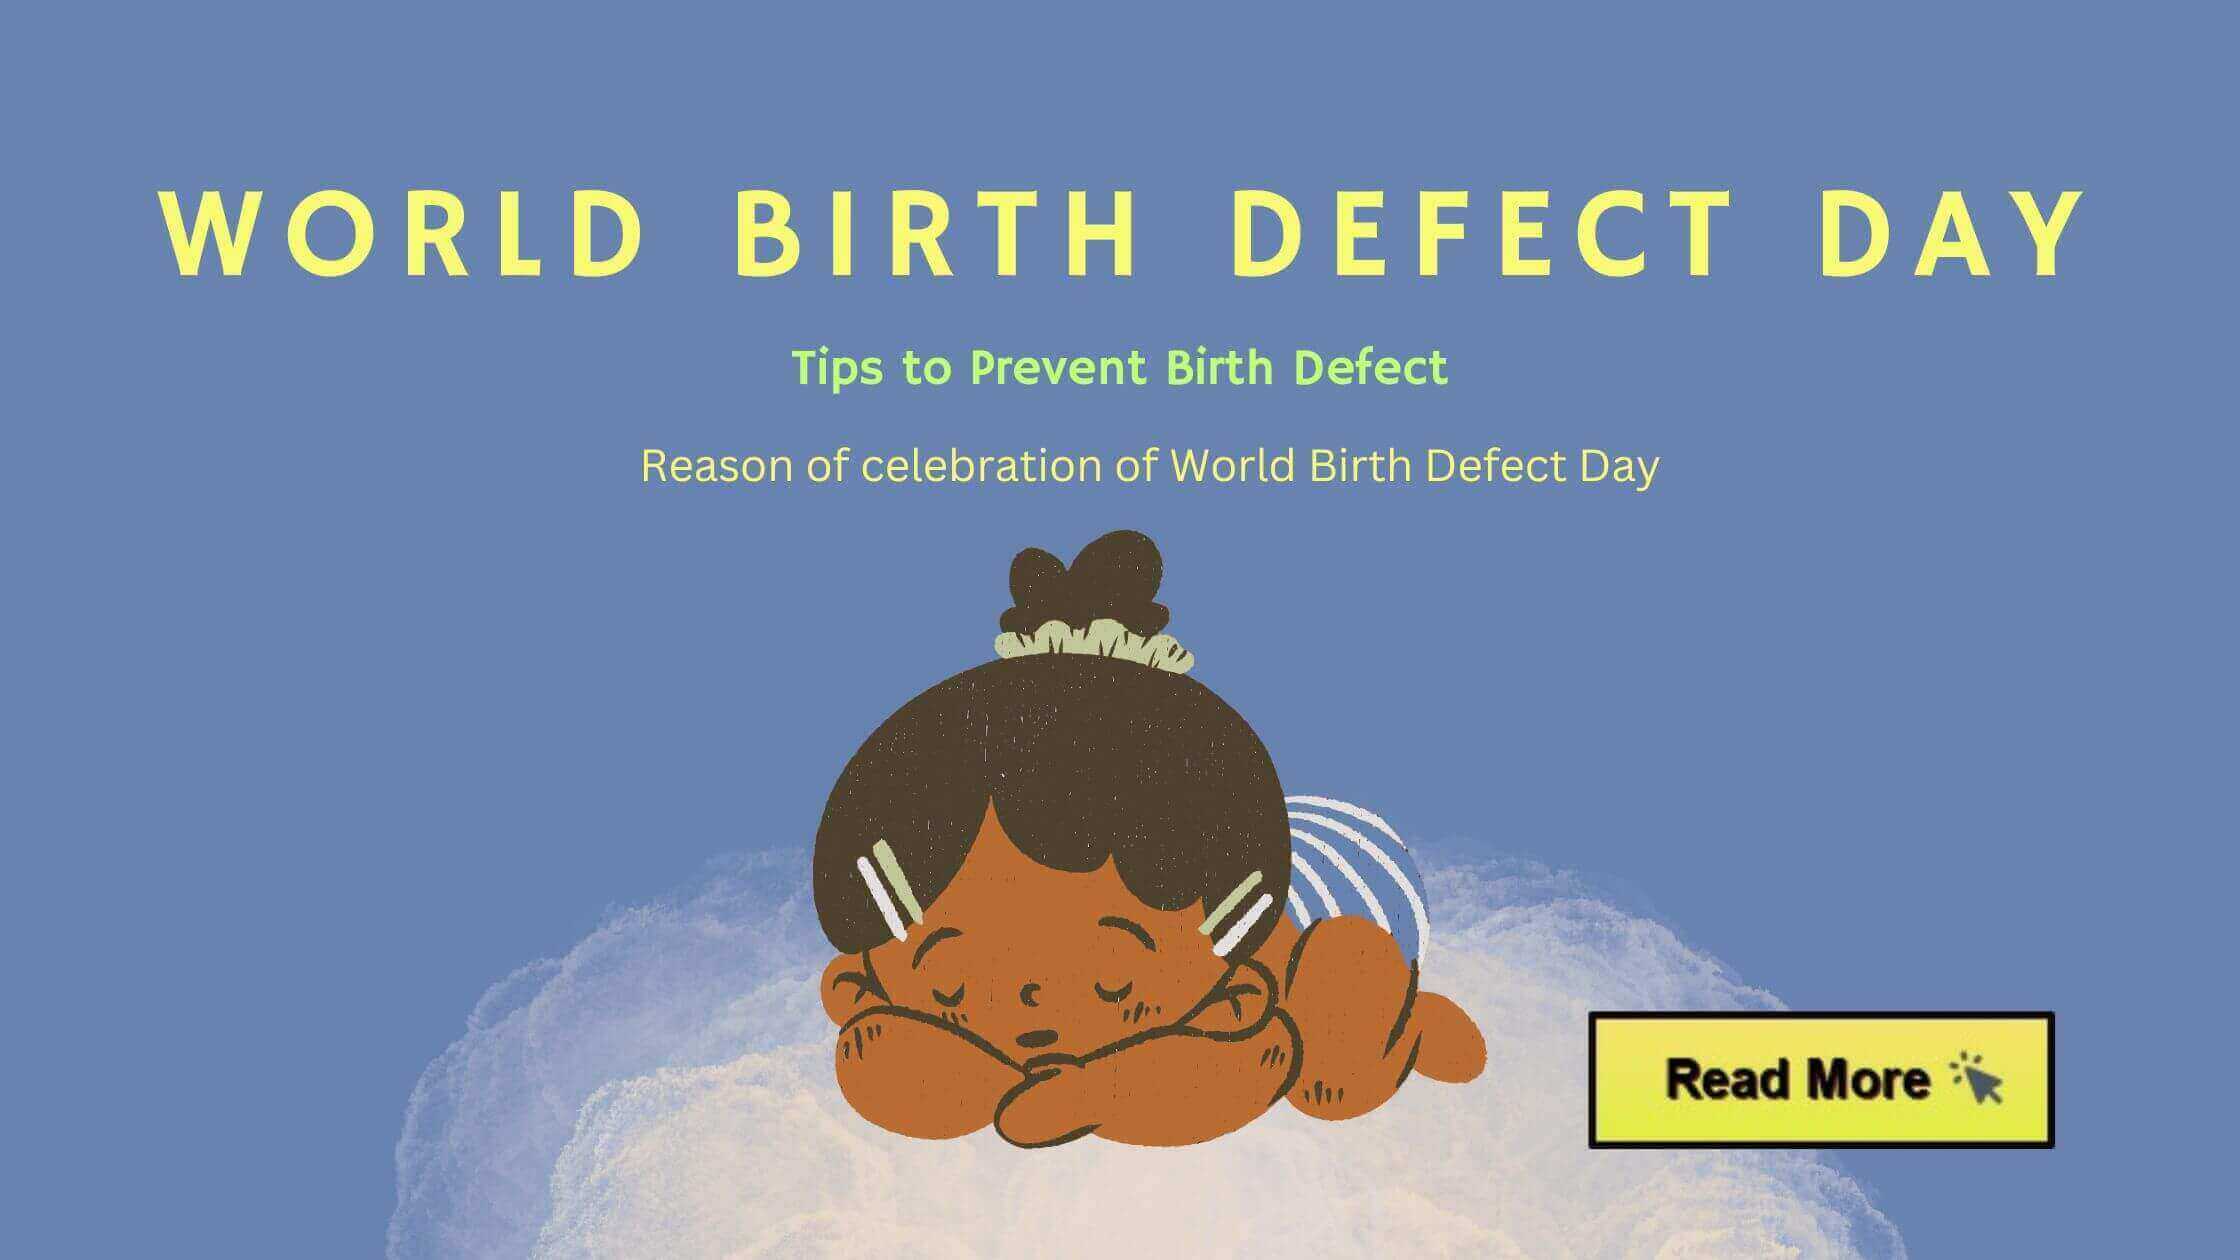 World Birth Defect Day - Popular in India